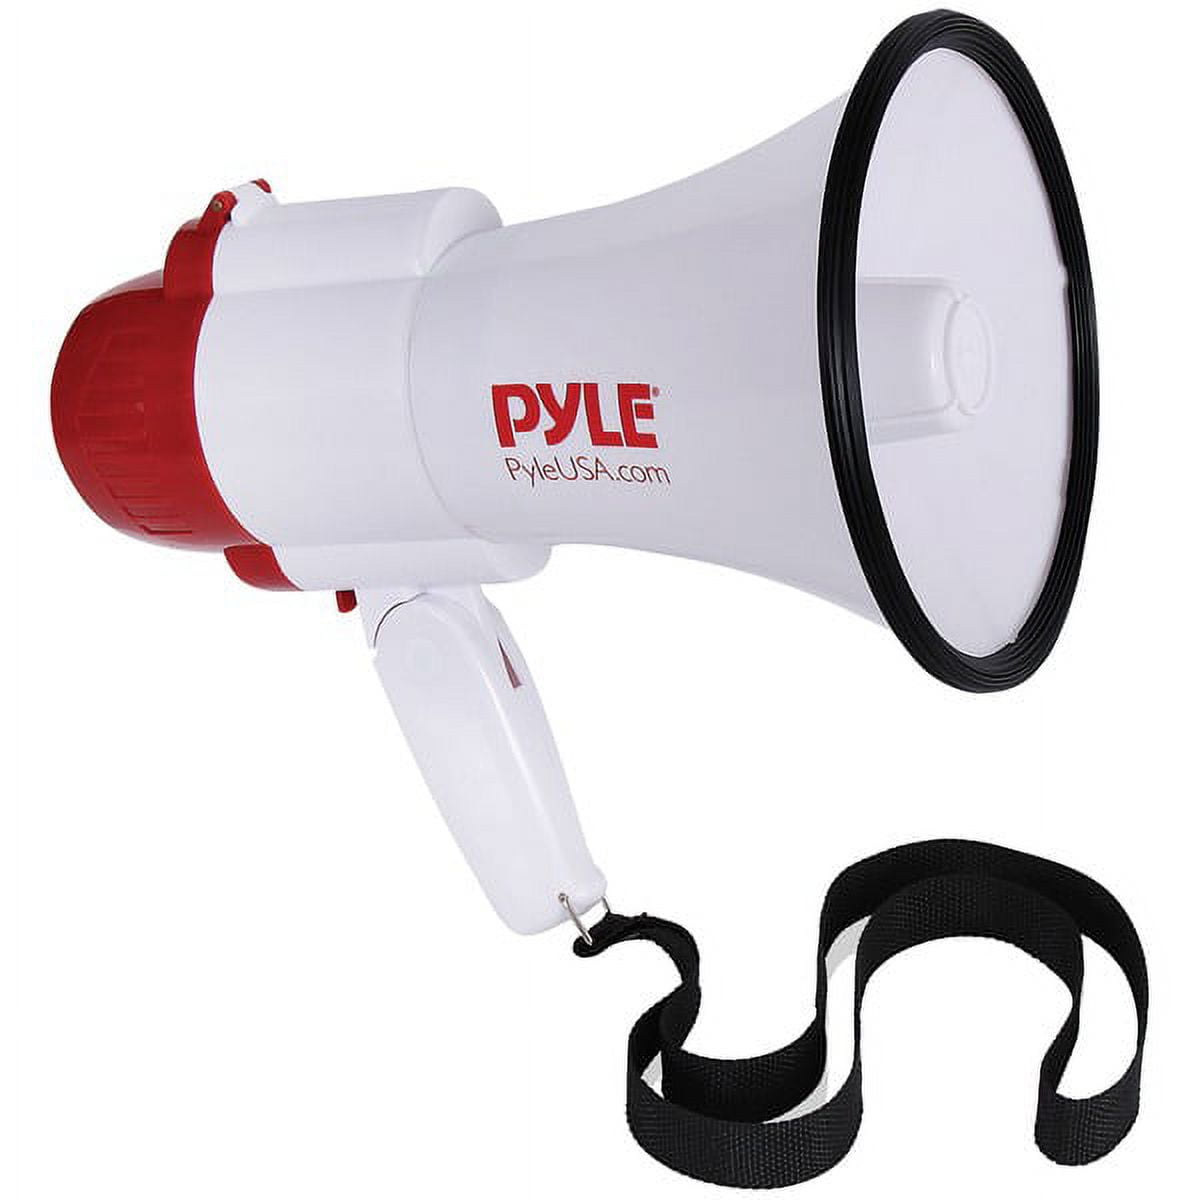 Pyle Pro 30-watt Megaphone Bullhorn with Siren & Voice Changer Modes (Black)